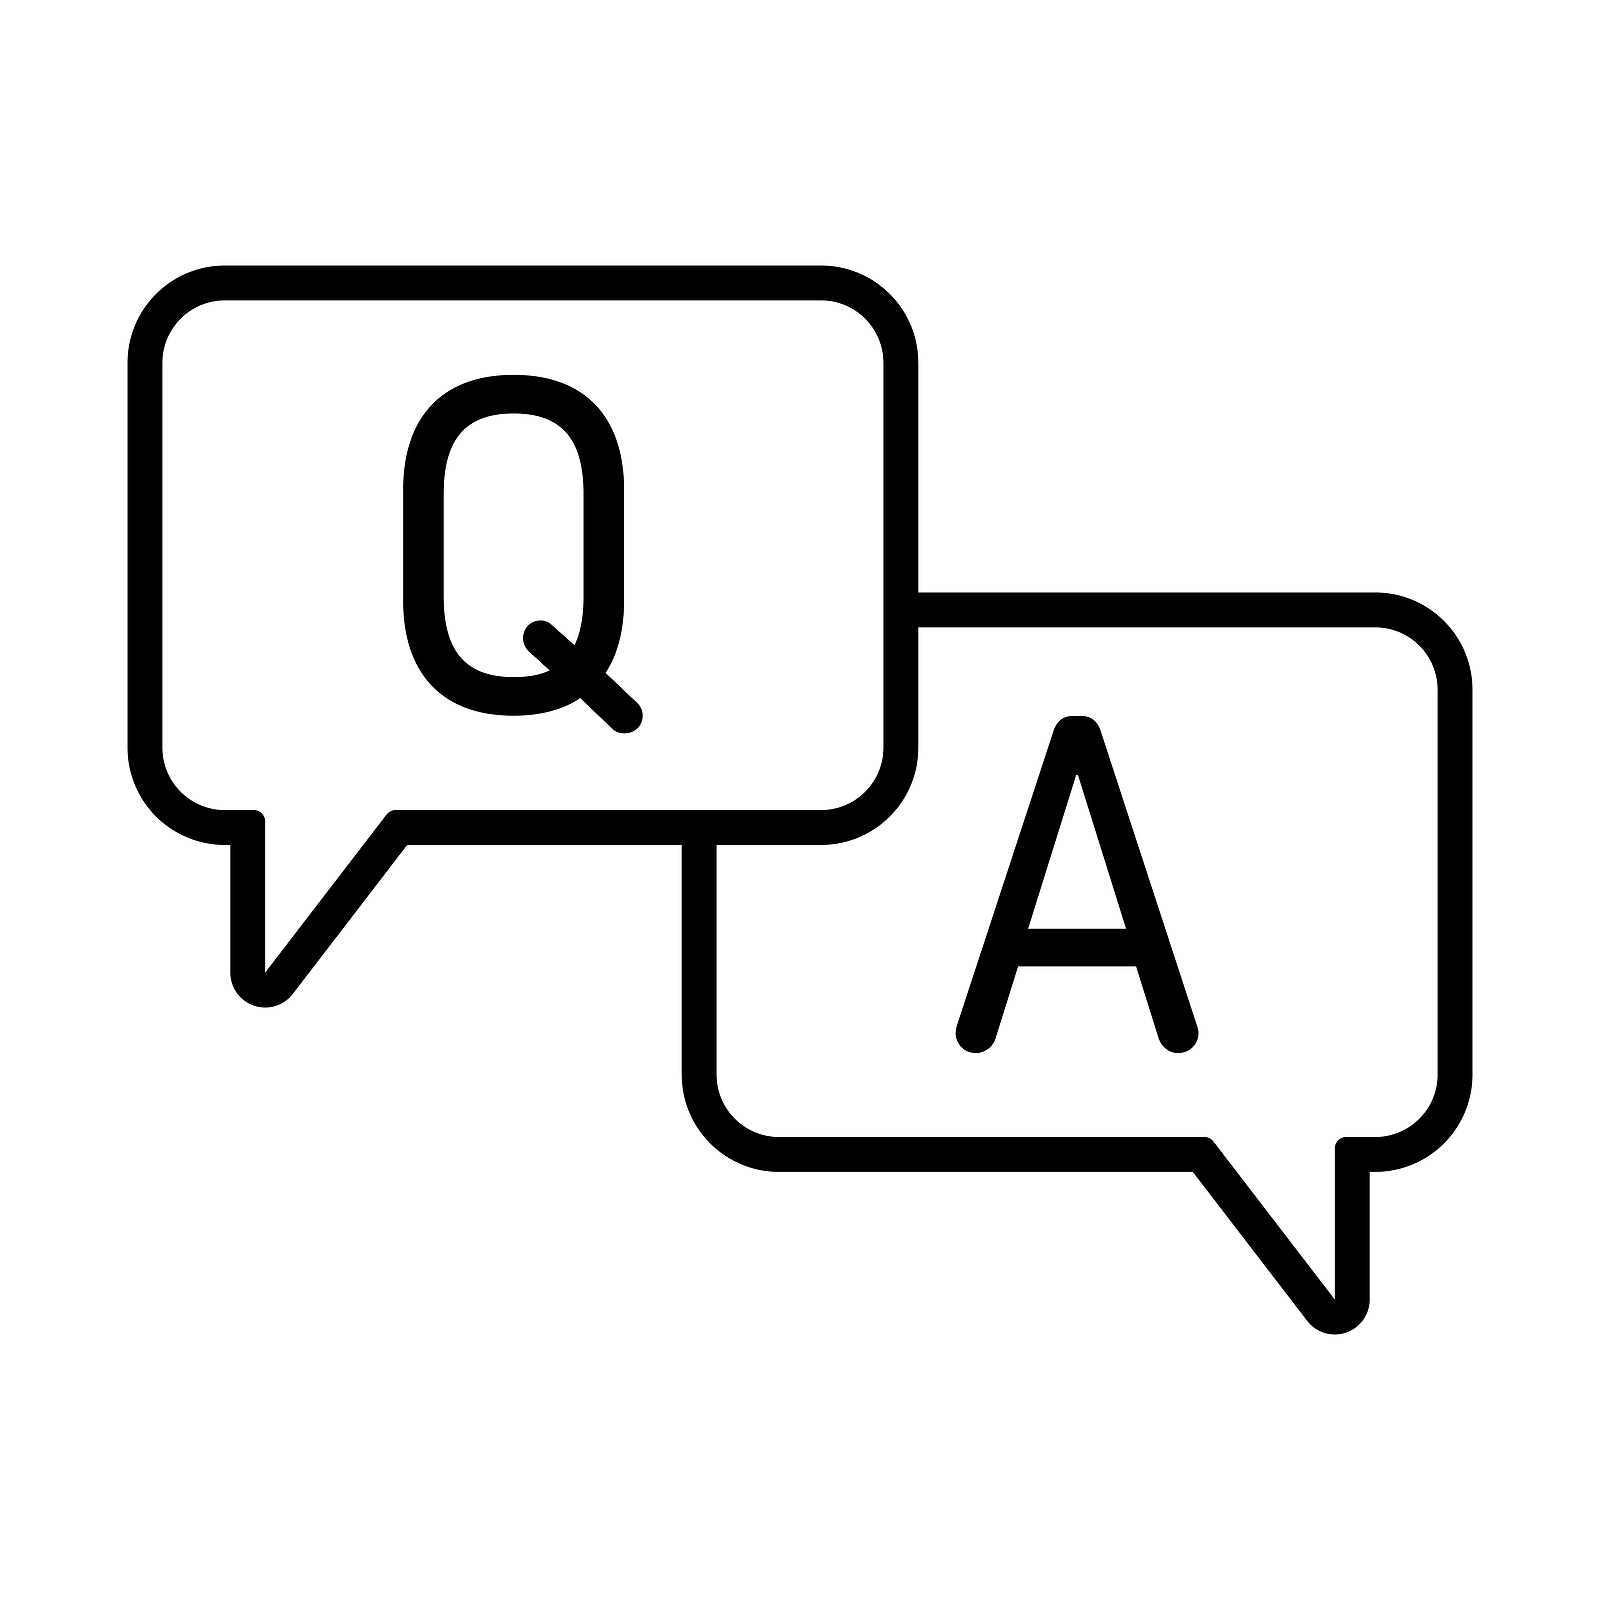 https://acplasticsurg.com/wp-content/uploads/2021/12/bigstock-Q-And-A-Letters-Questions-And-433178216.jpg